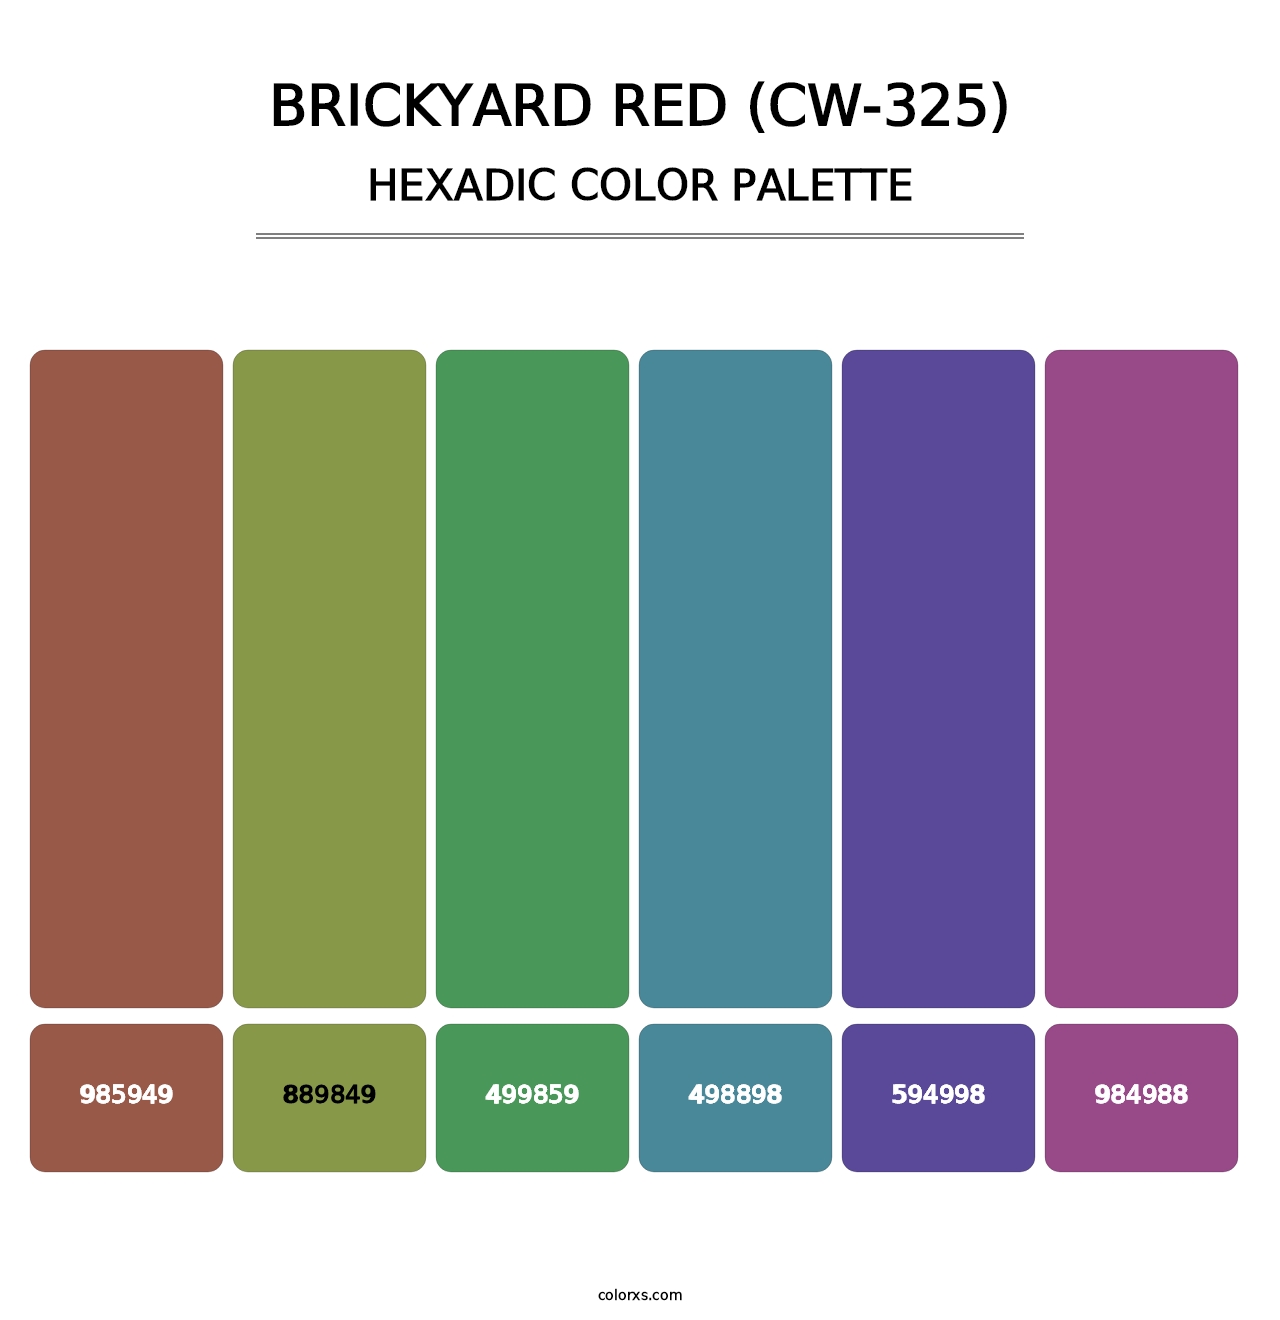 Brickyard Red (CW-325) - Hexadic Color Palette